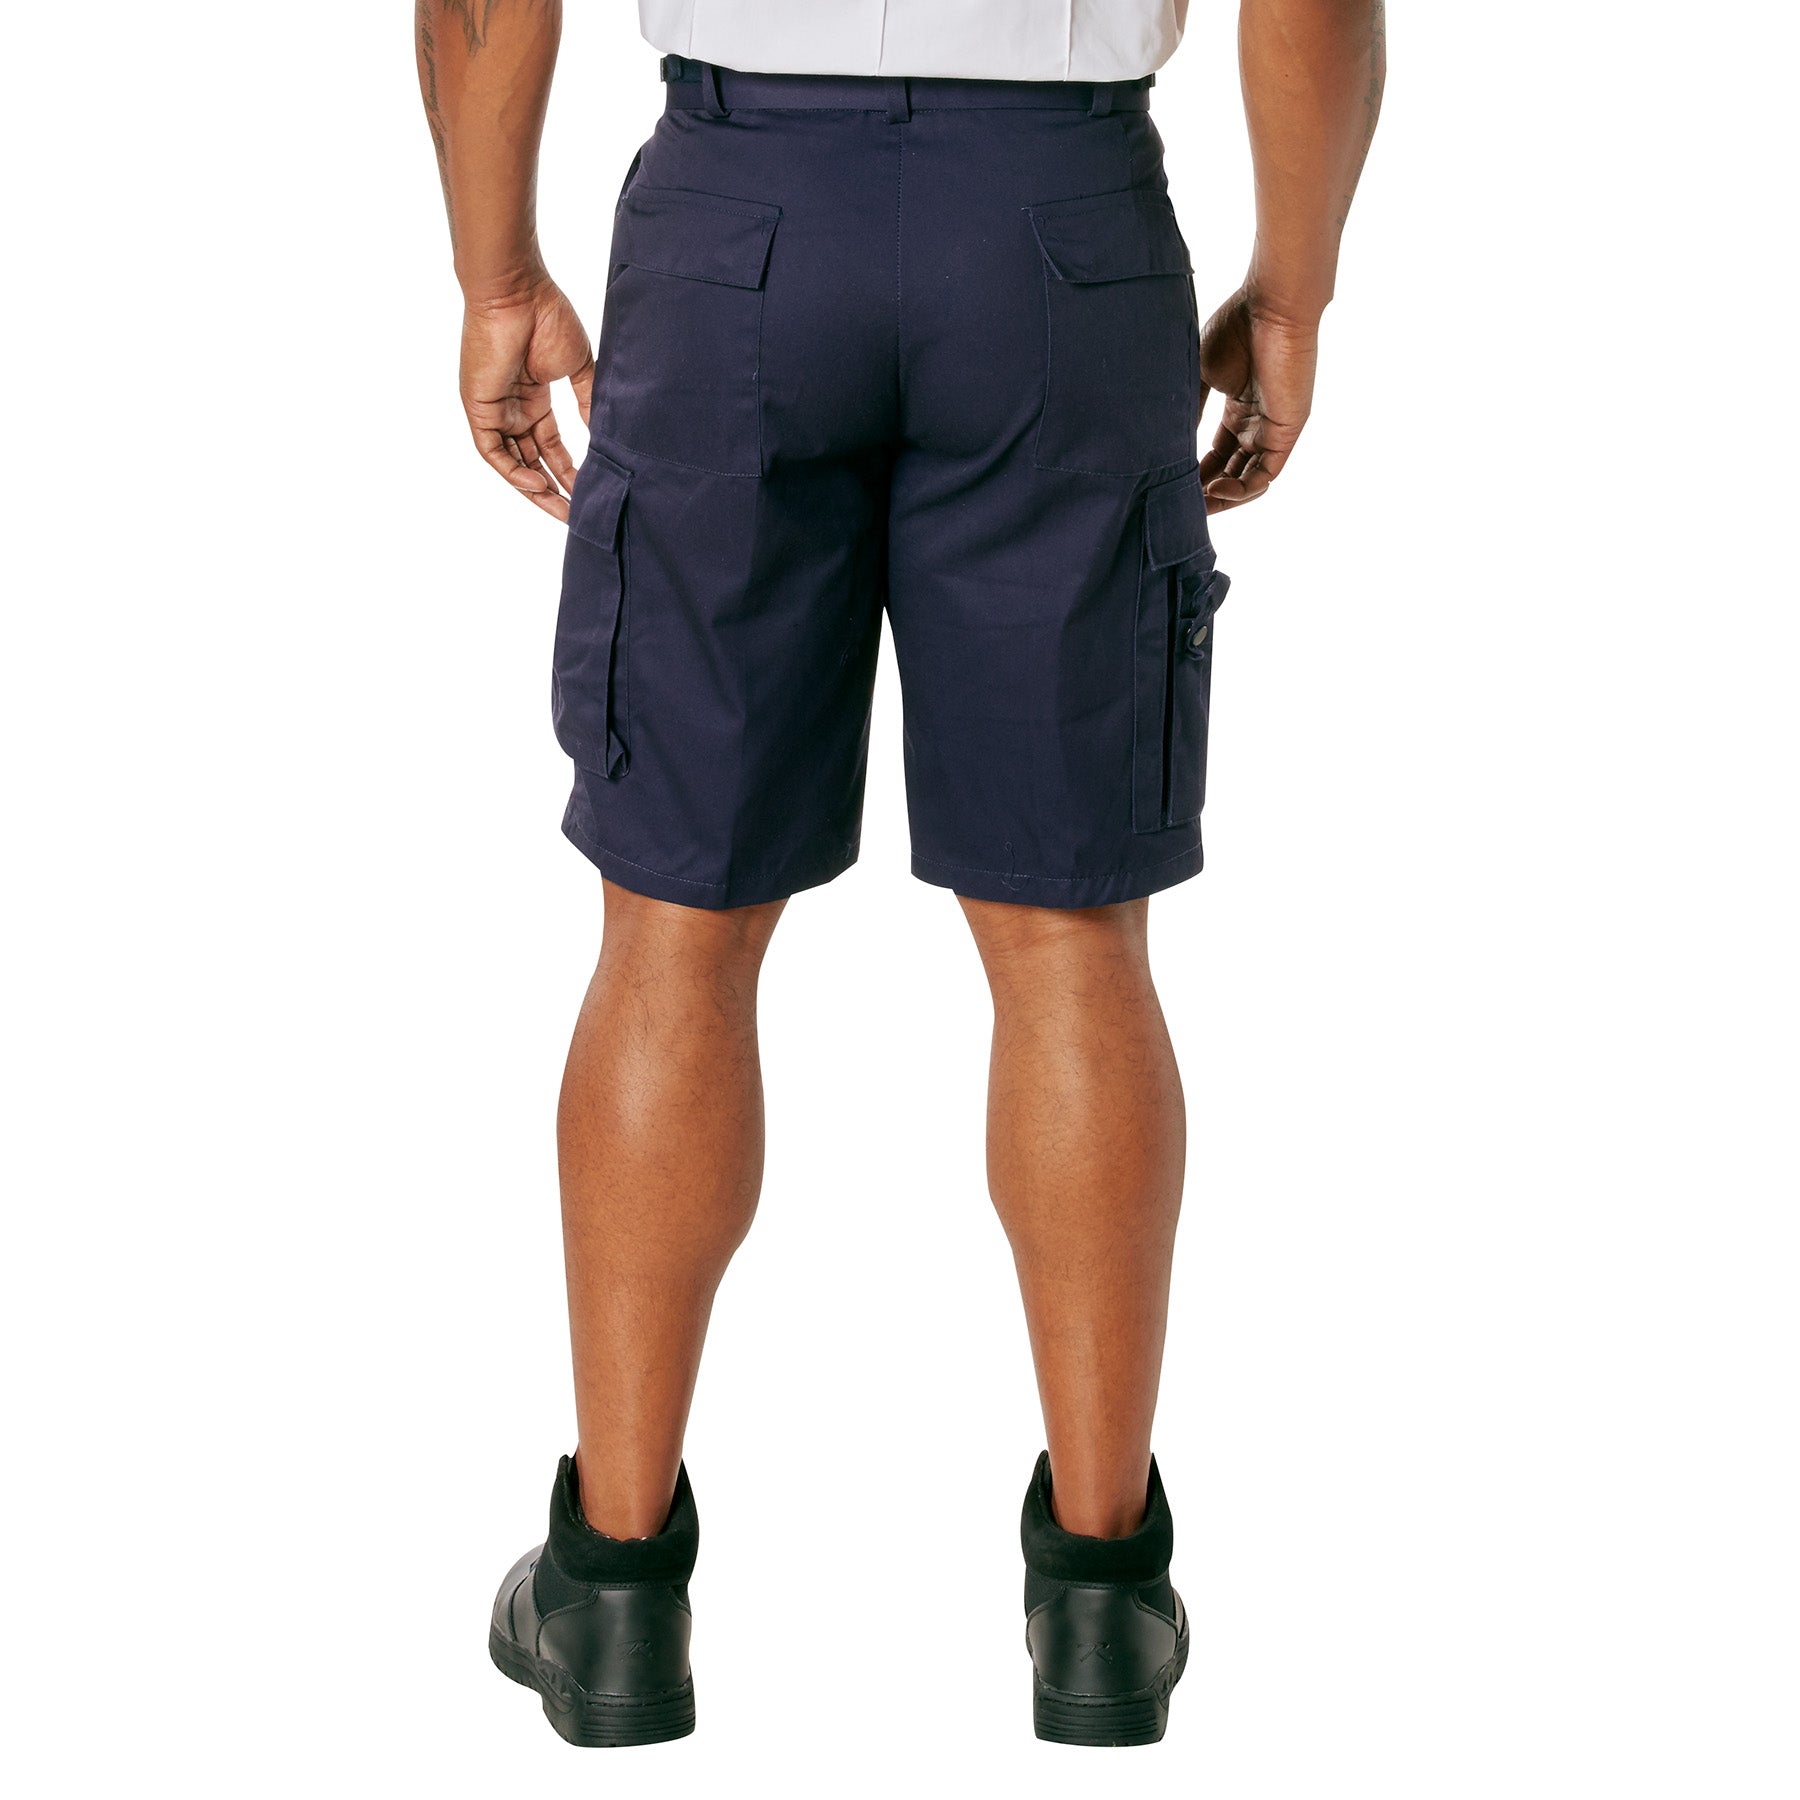 [Public Safety] Poly/Cotton EMT Shorts